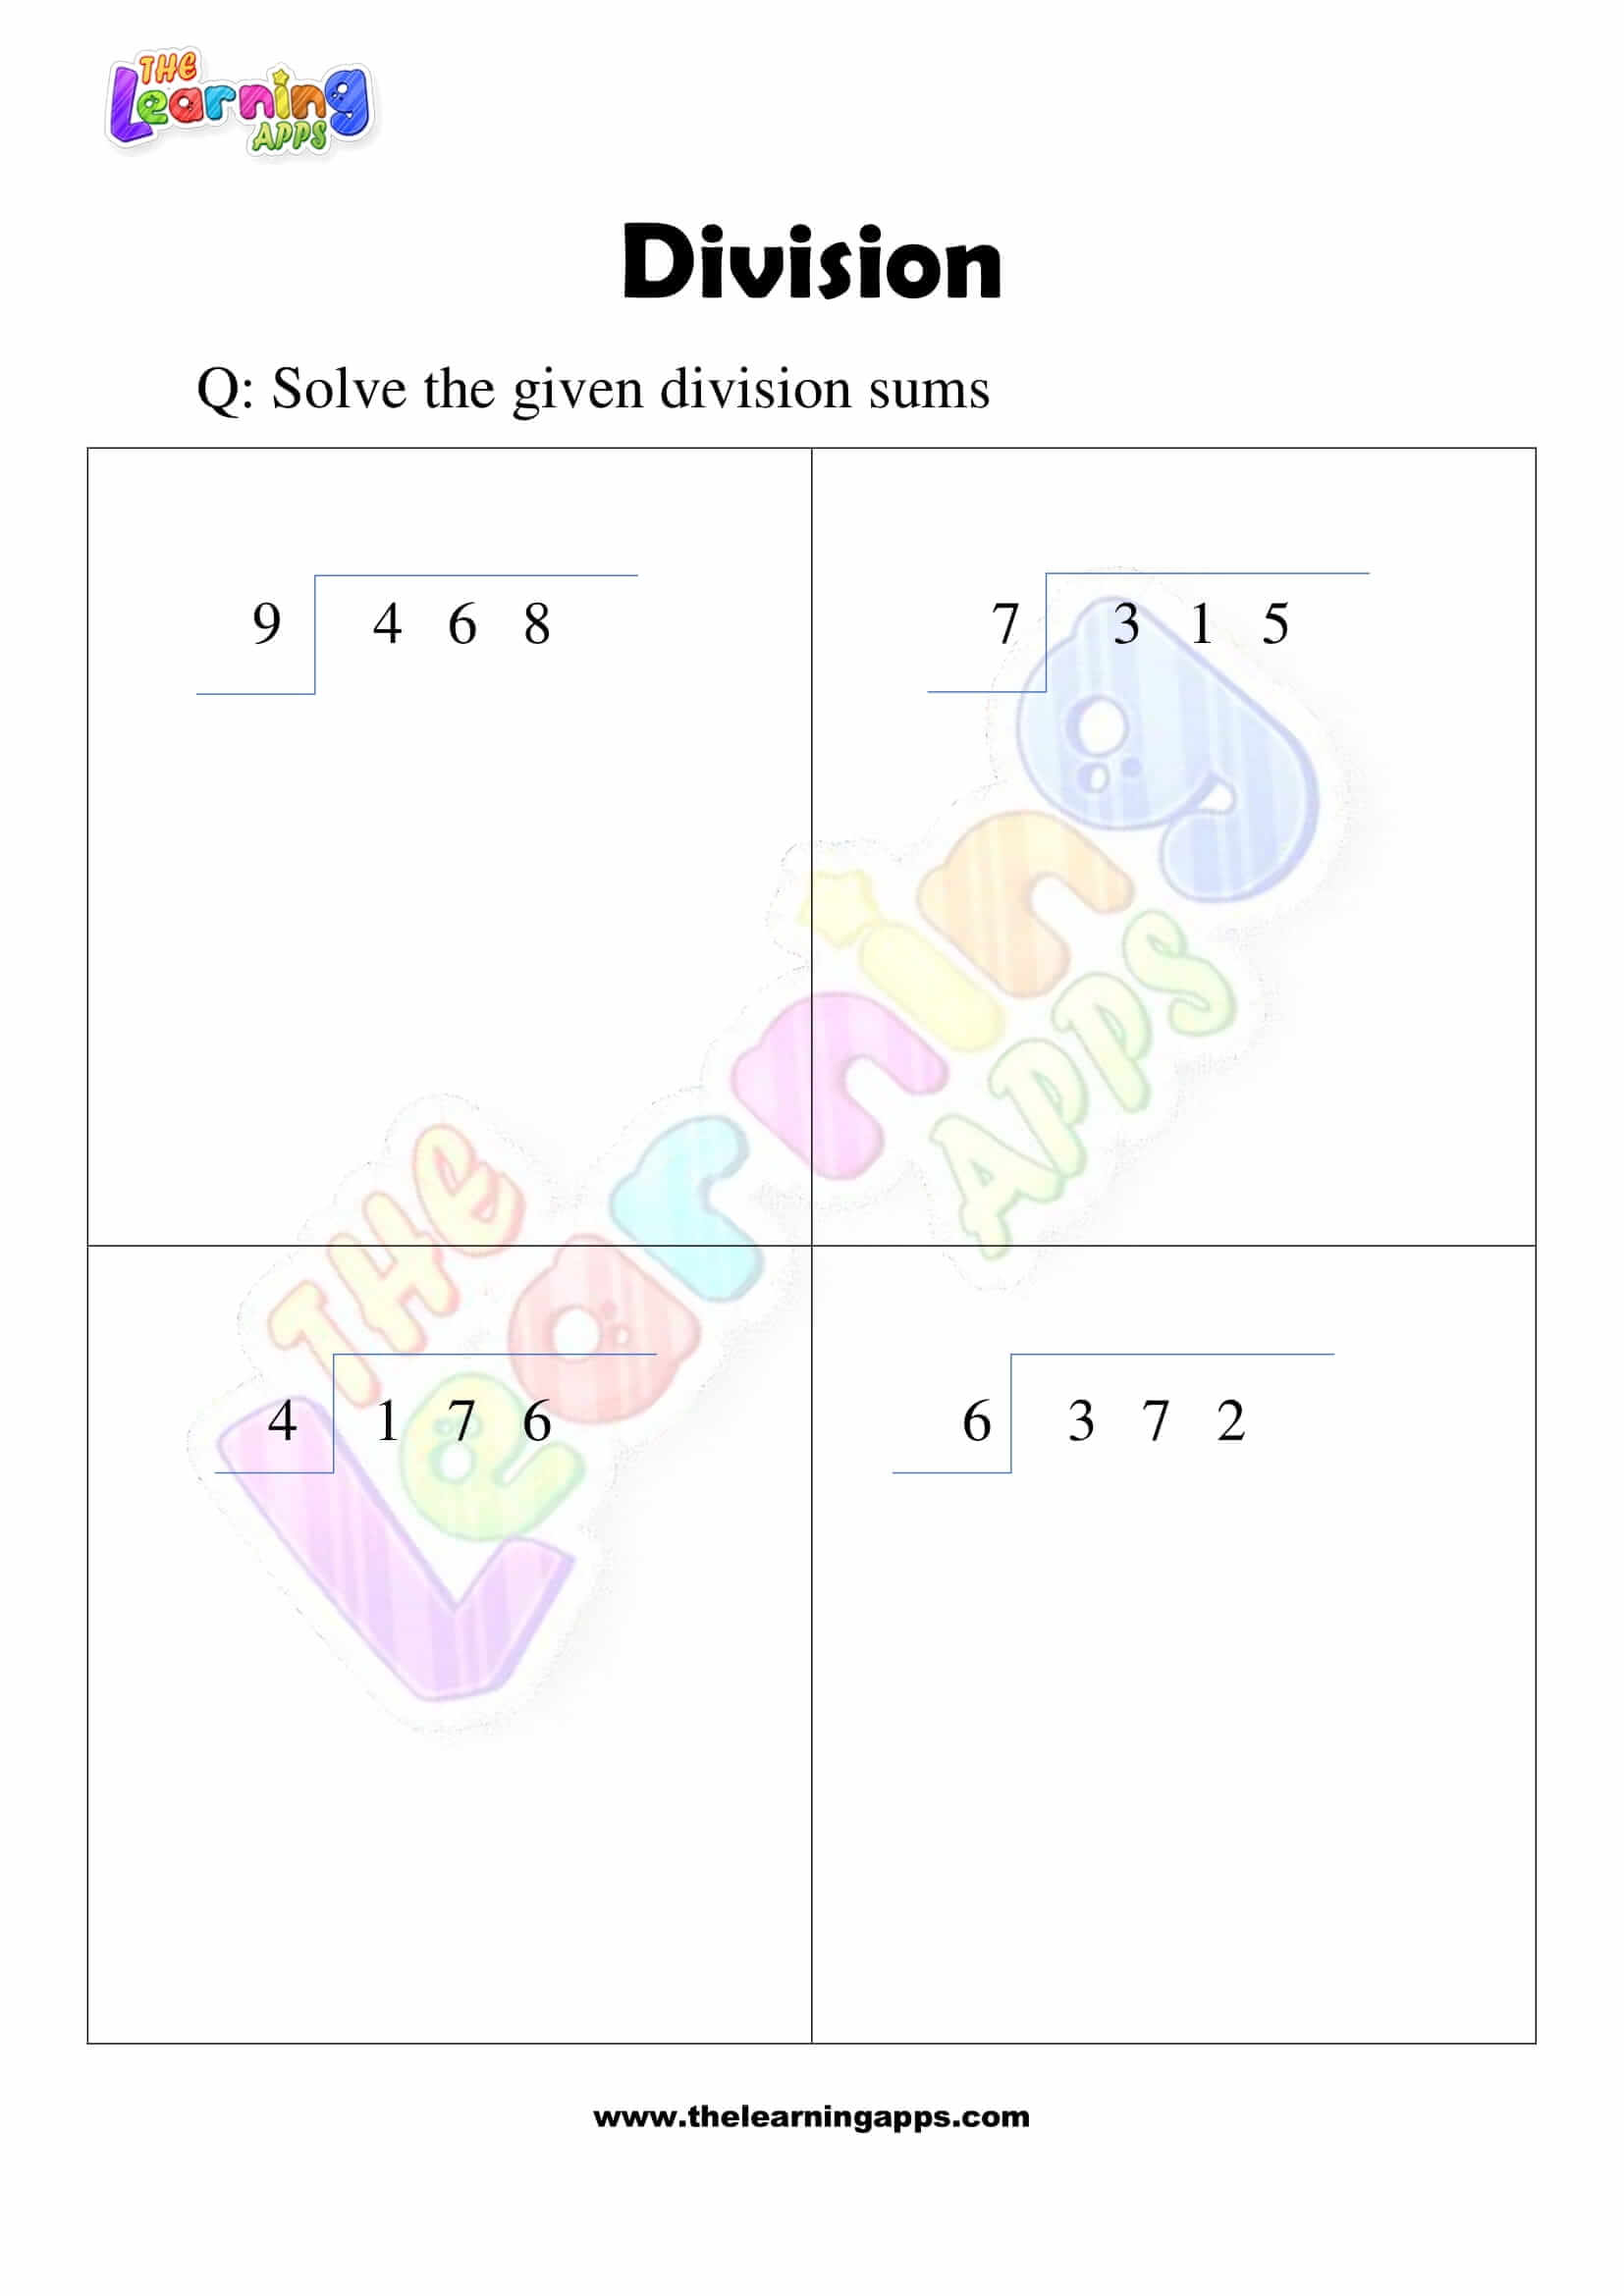 Division Worksheet - Grade 3 - Activity 8